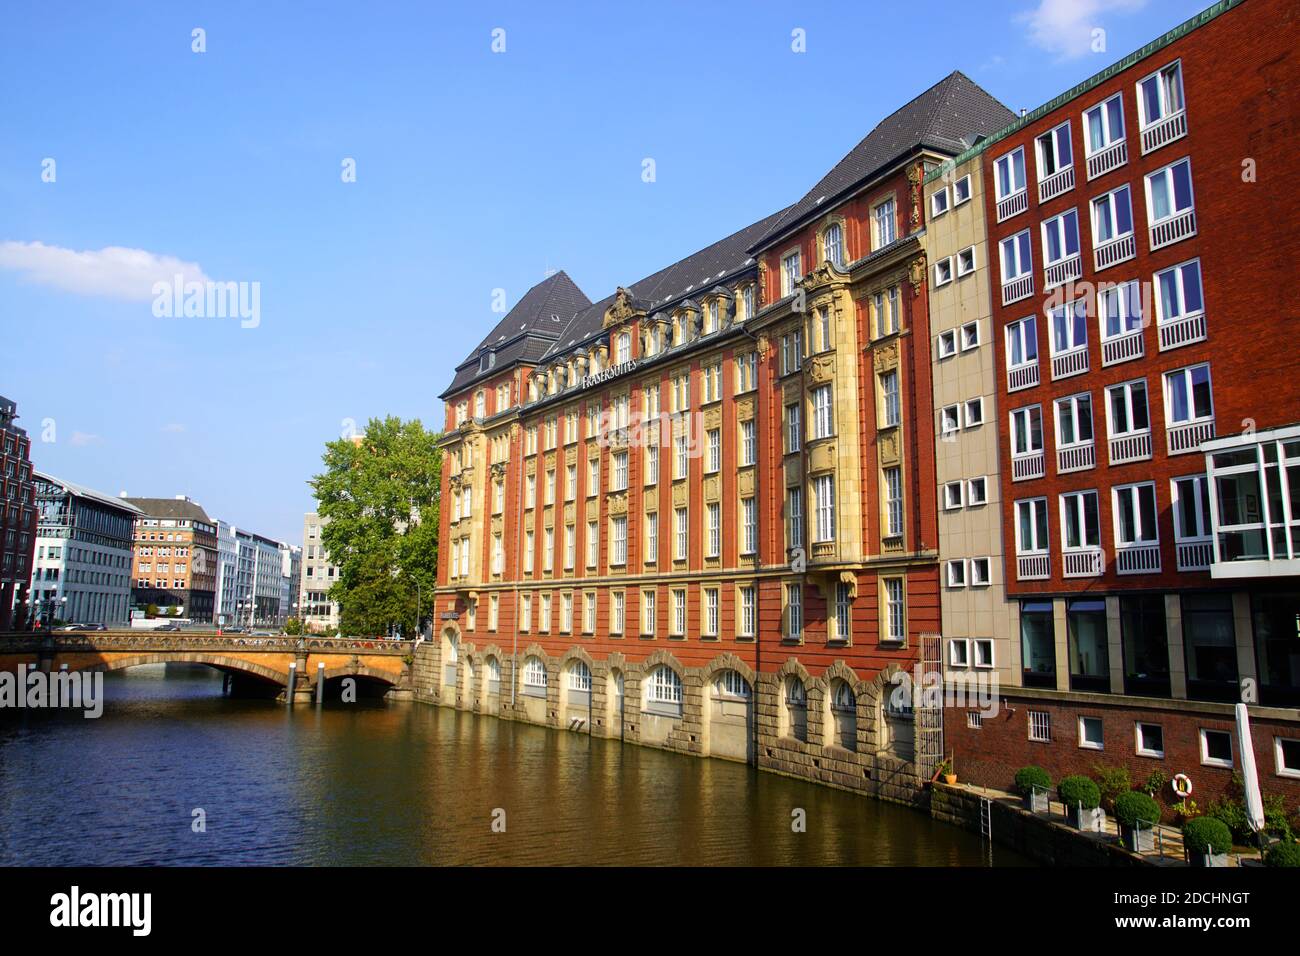 The Alsterfleet canal in Hamburg, Germany Stock Photo